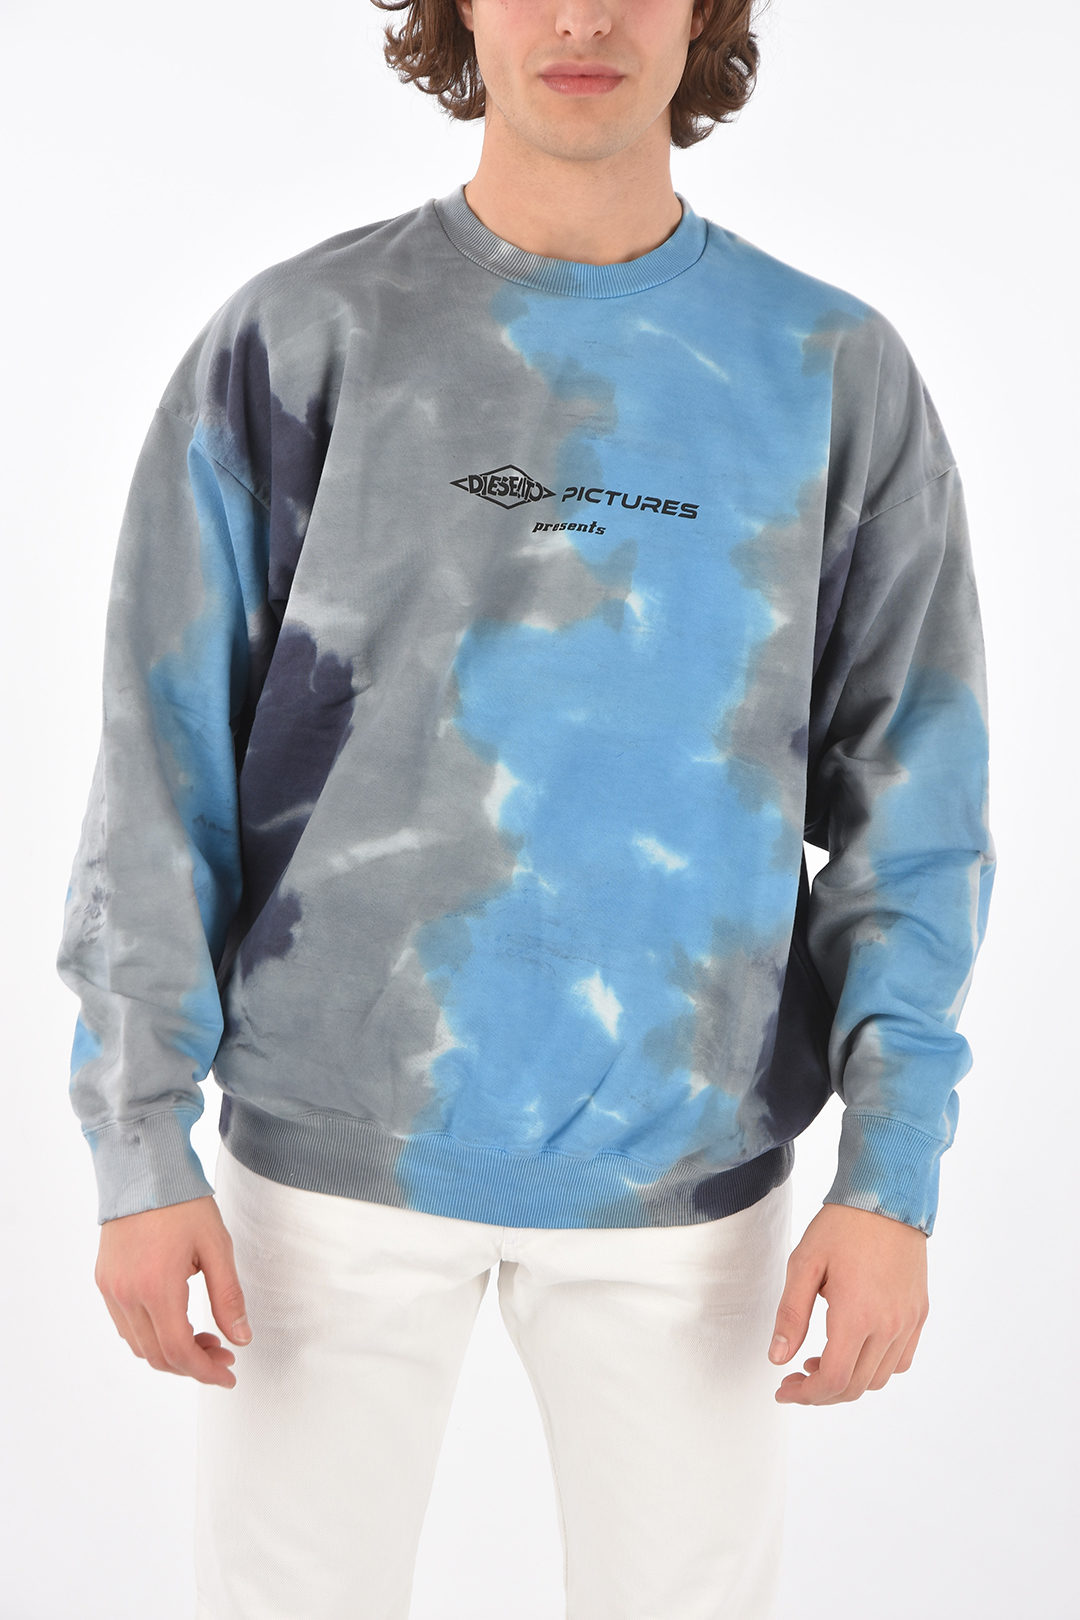 tie dye effect S-MART-E4 crew-neck sweatshirt with print on the back